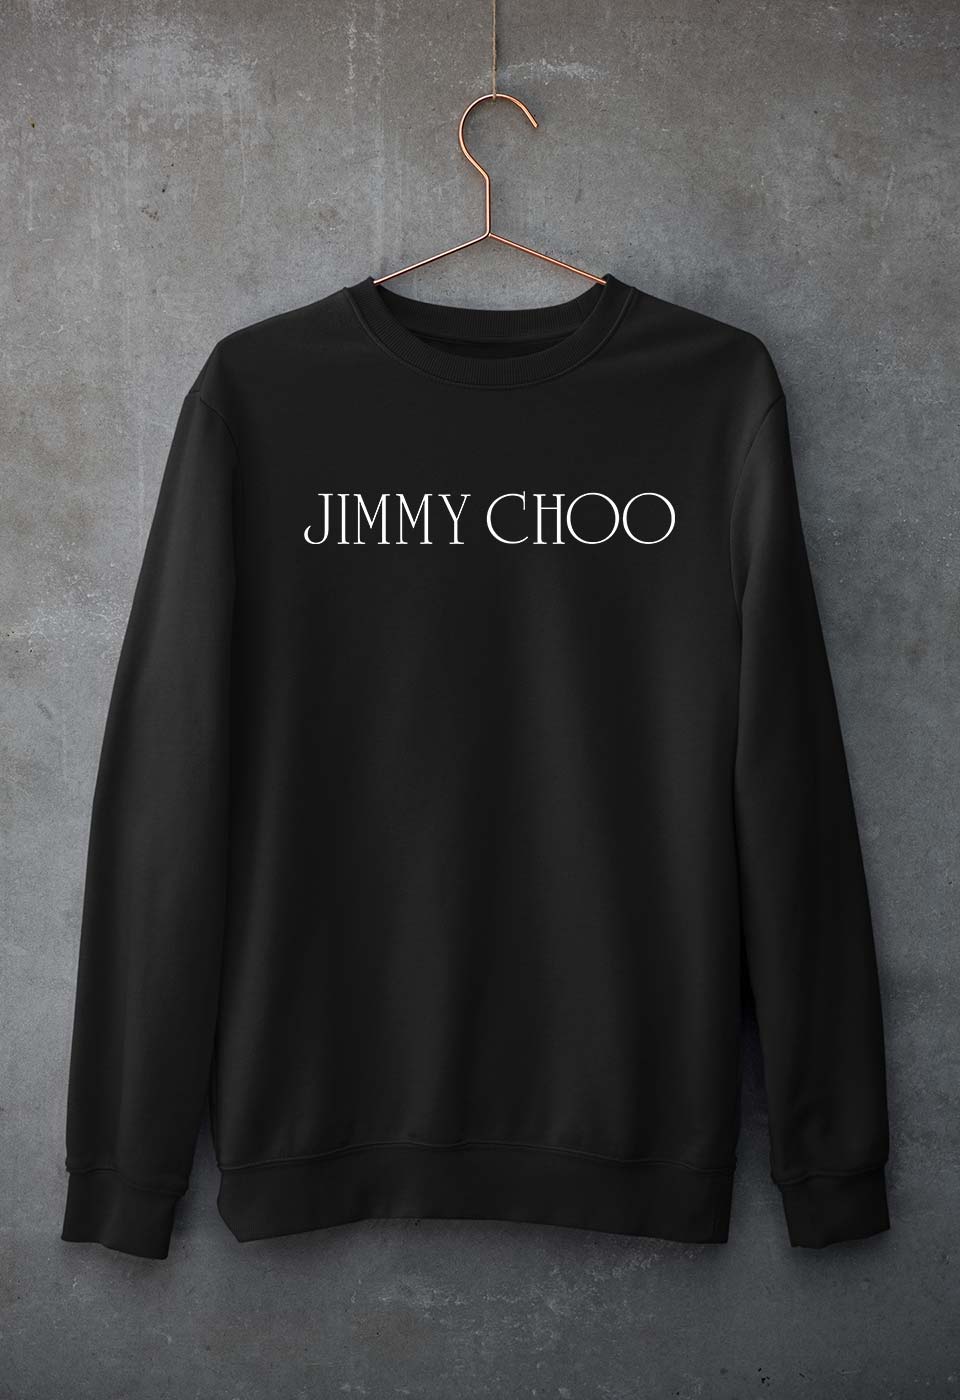 Jimmy Choo Unisex Sweatshirt for Men/Women-S(40 Inches)-Black-Ektarfa.online